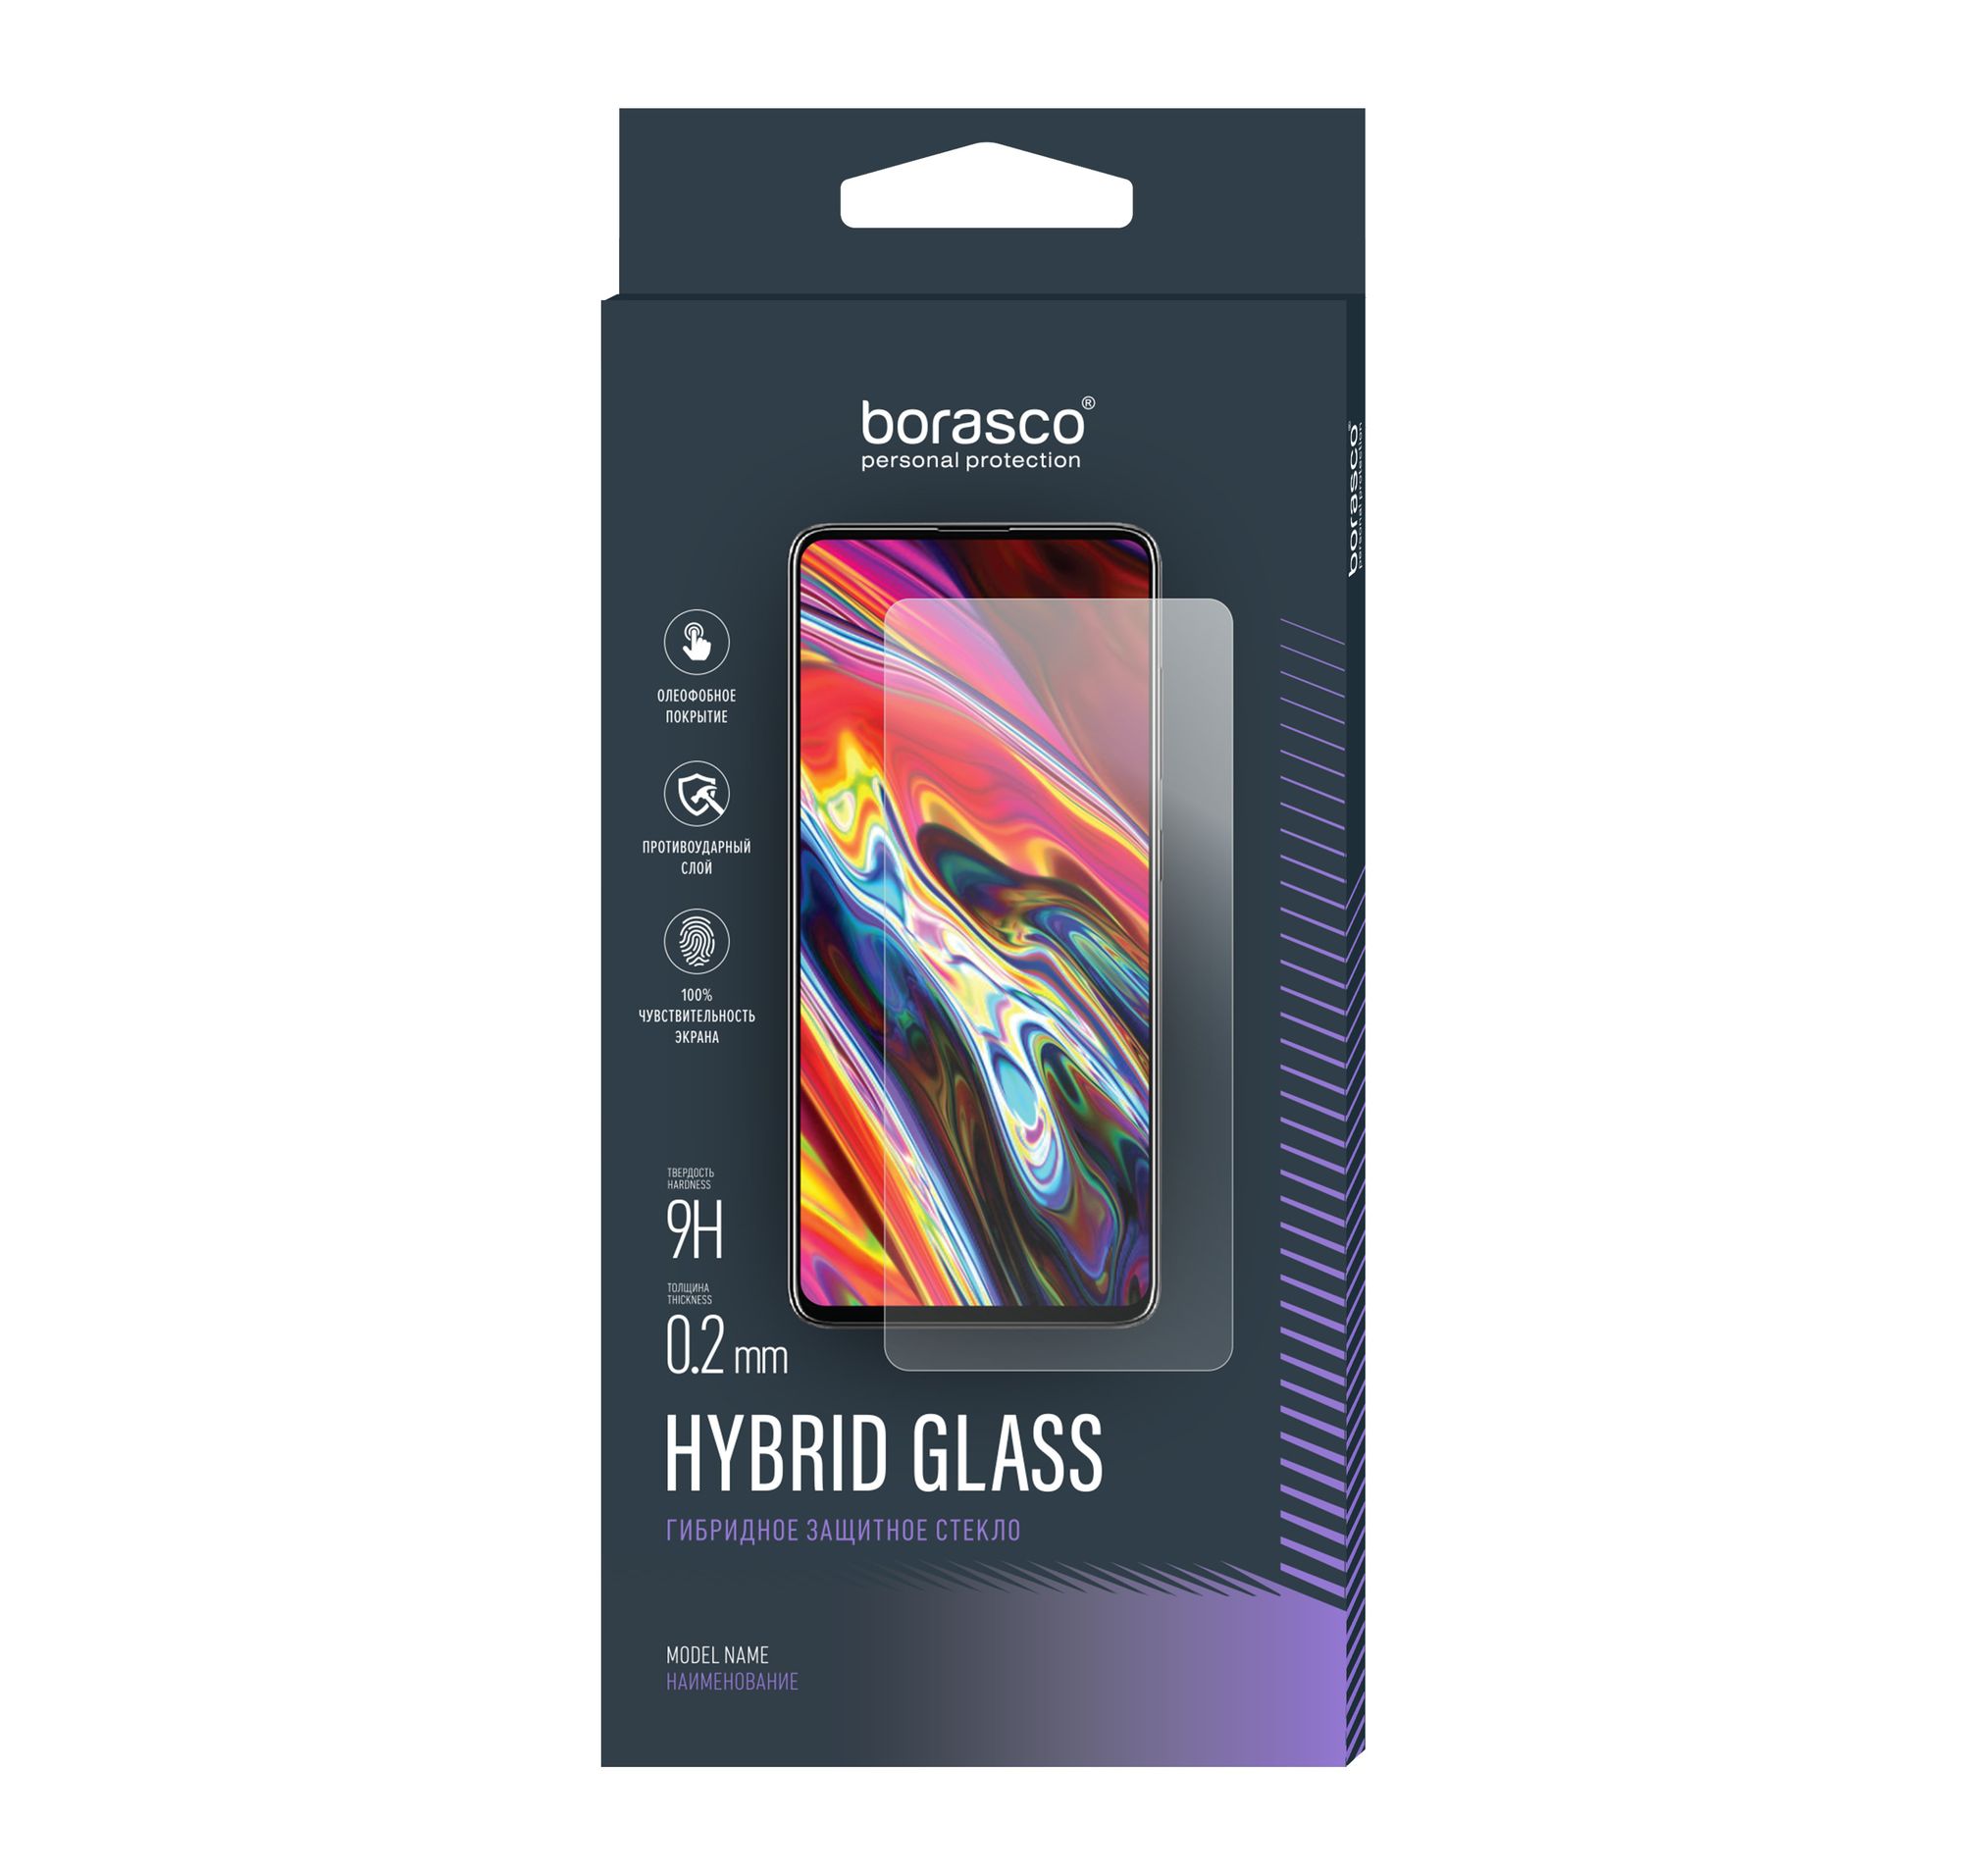 Стекло защитное Hybrid Glass VSP 0,26 мм для Samsung Galaxy A7 2018 защитное стекло для samsung galaxy a7 2018 a750 a750f a730f закаленное для samsung a9 a8 a6 plus 2018